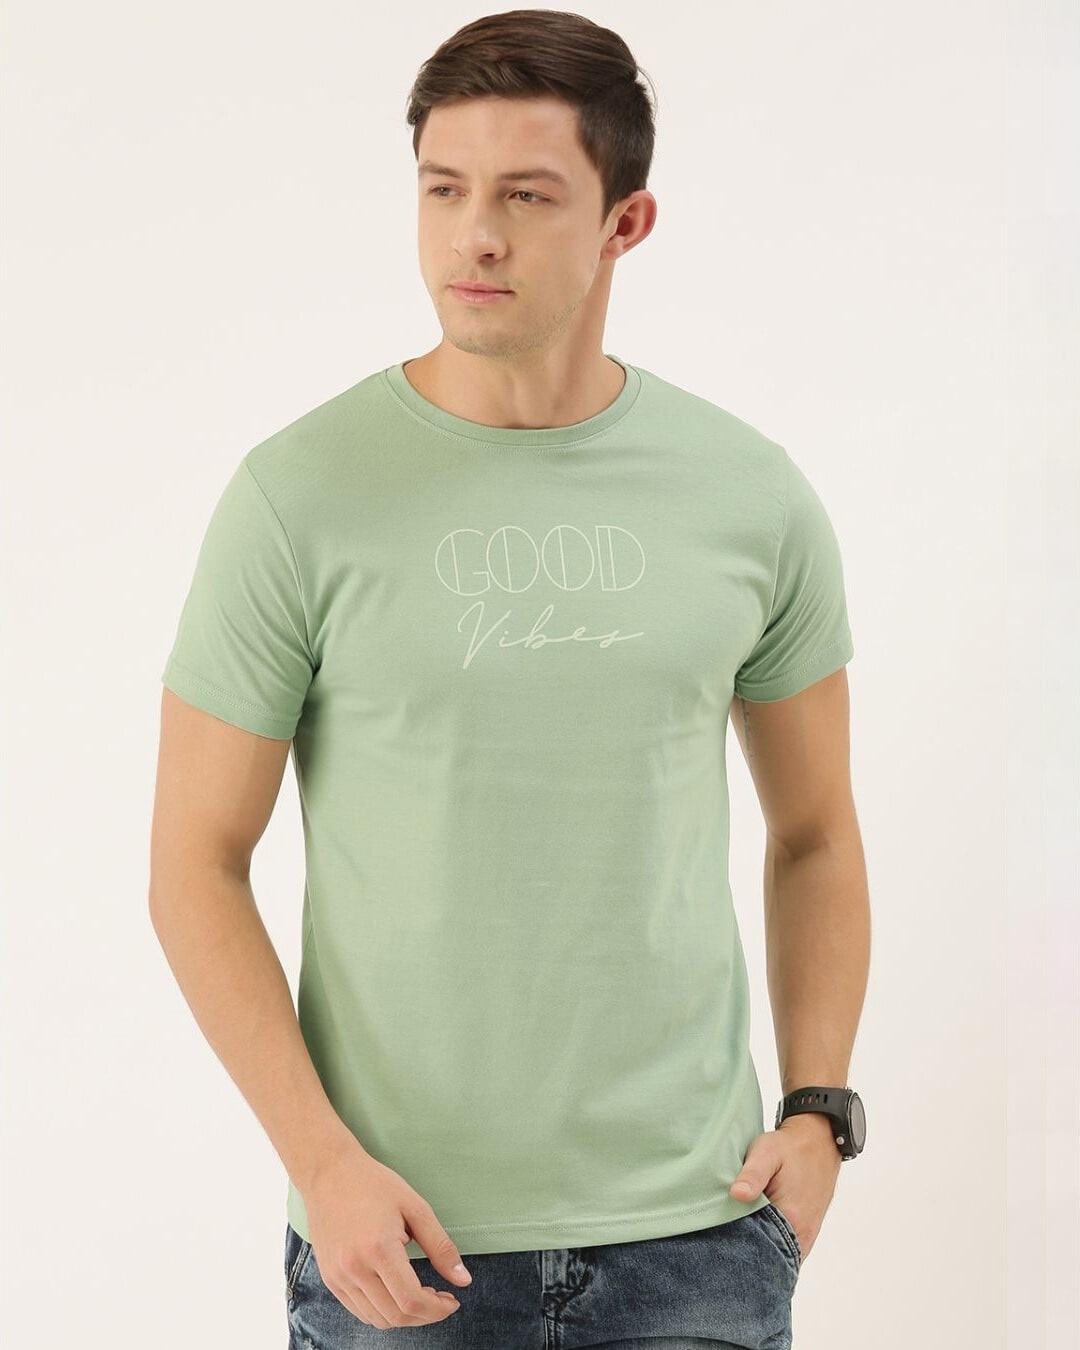 Shop Men's Green Typography T-shirt